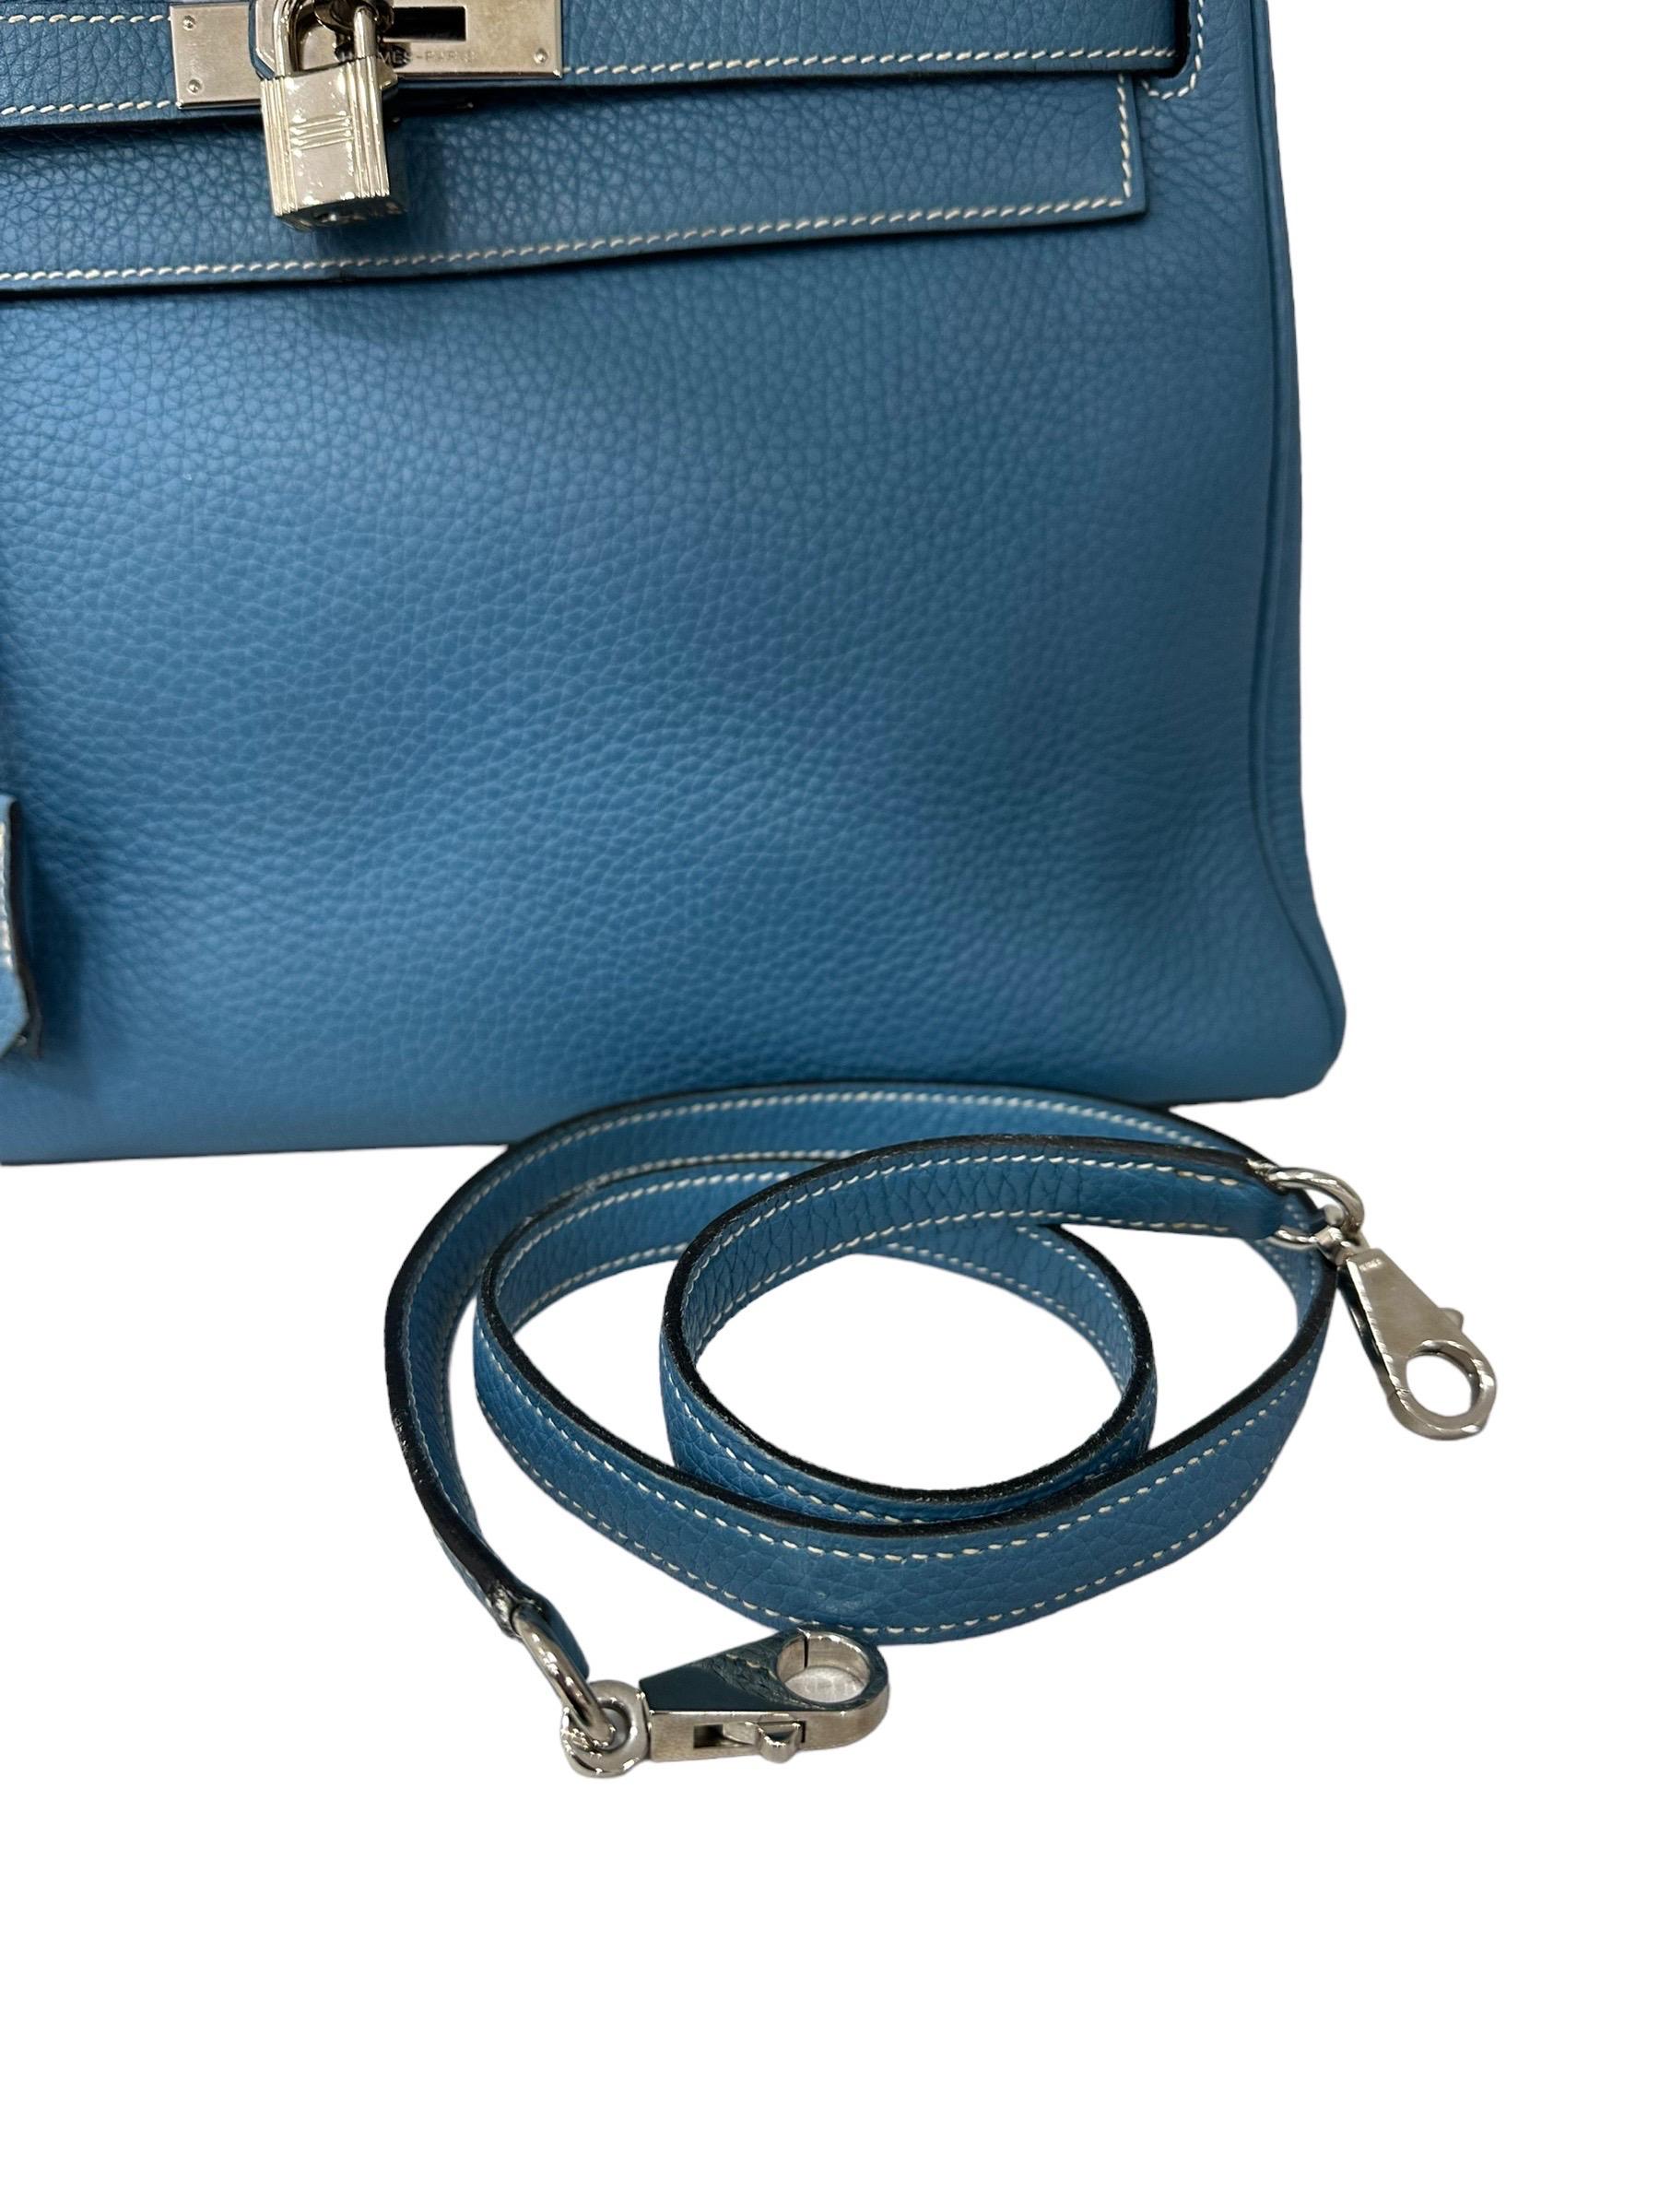 Hermès Kelly Bag 32 Clemence Leather Blue Izmir Top Handle Bag For Sale 11